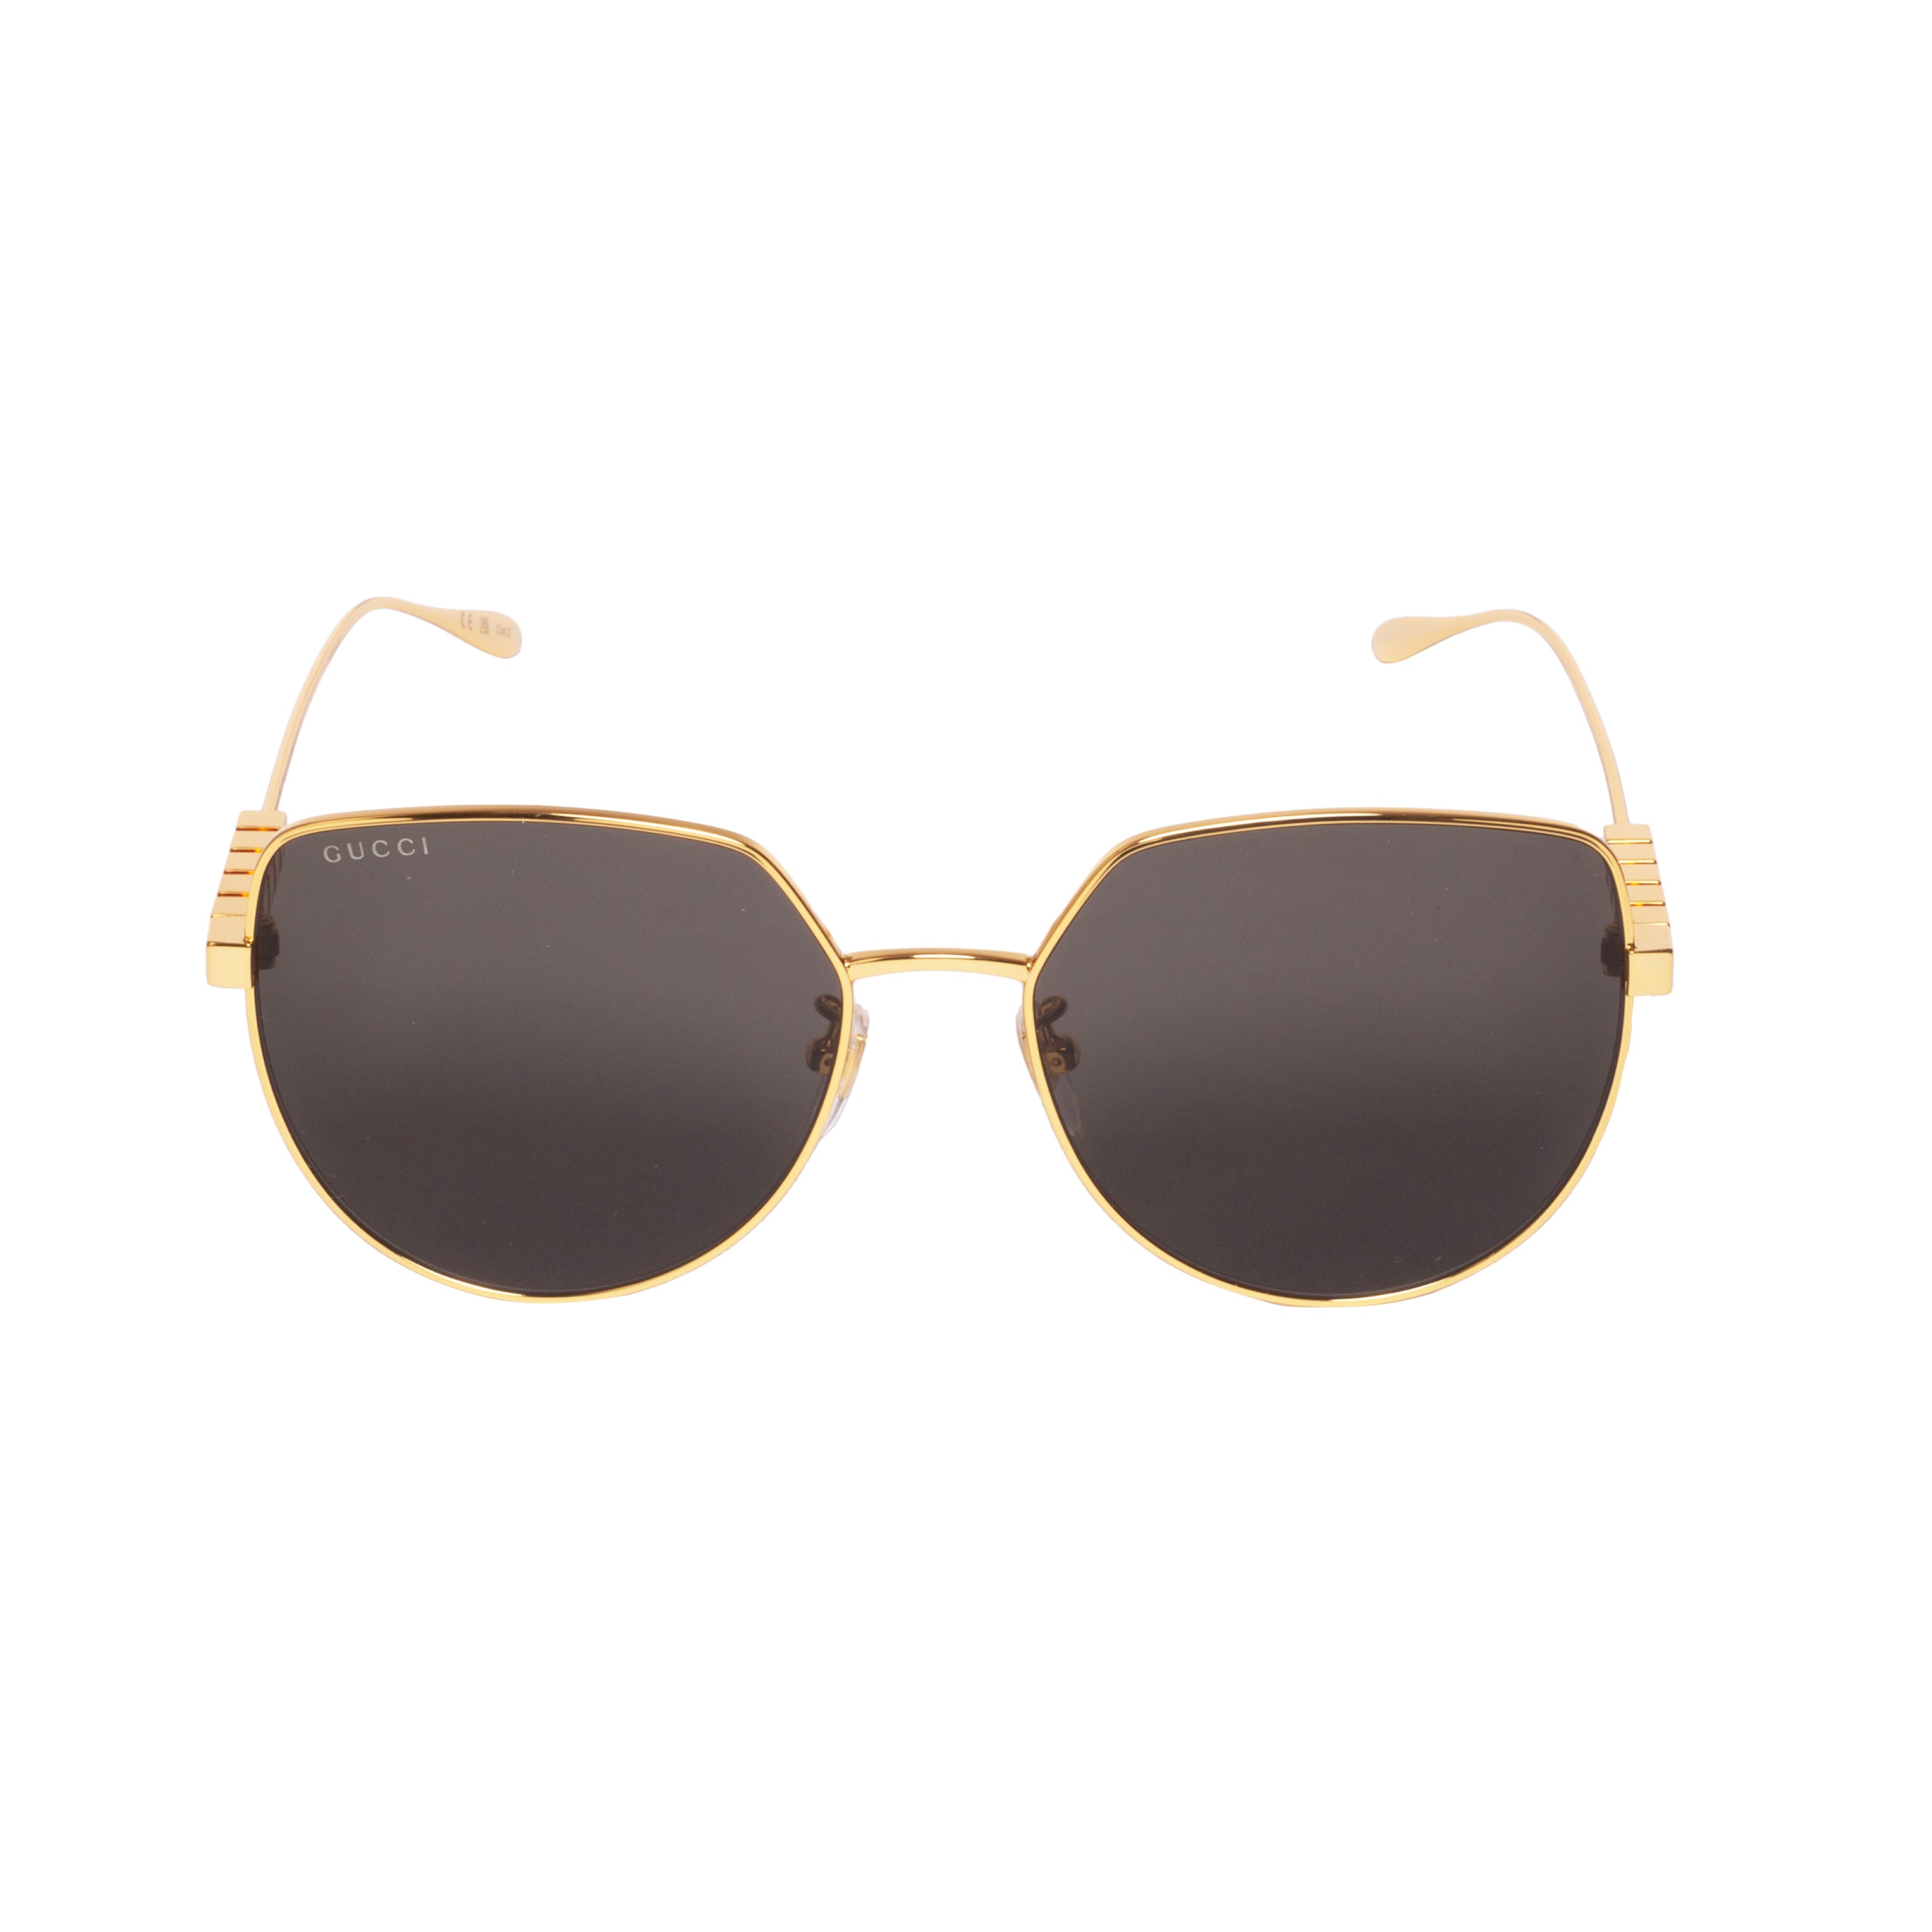 Gucci-GG 1435SA-58-001 Sunglasses - Premium Sunglasses from Gucci - Just Rs. 30600! Shop now at Laxmi Opticians